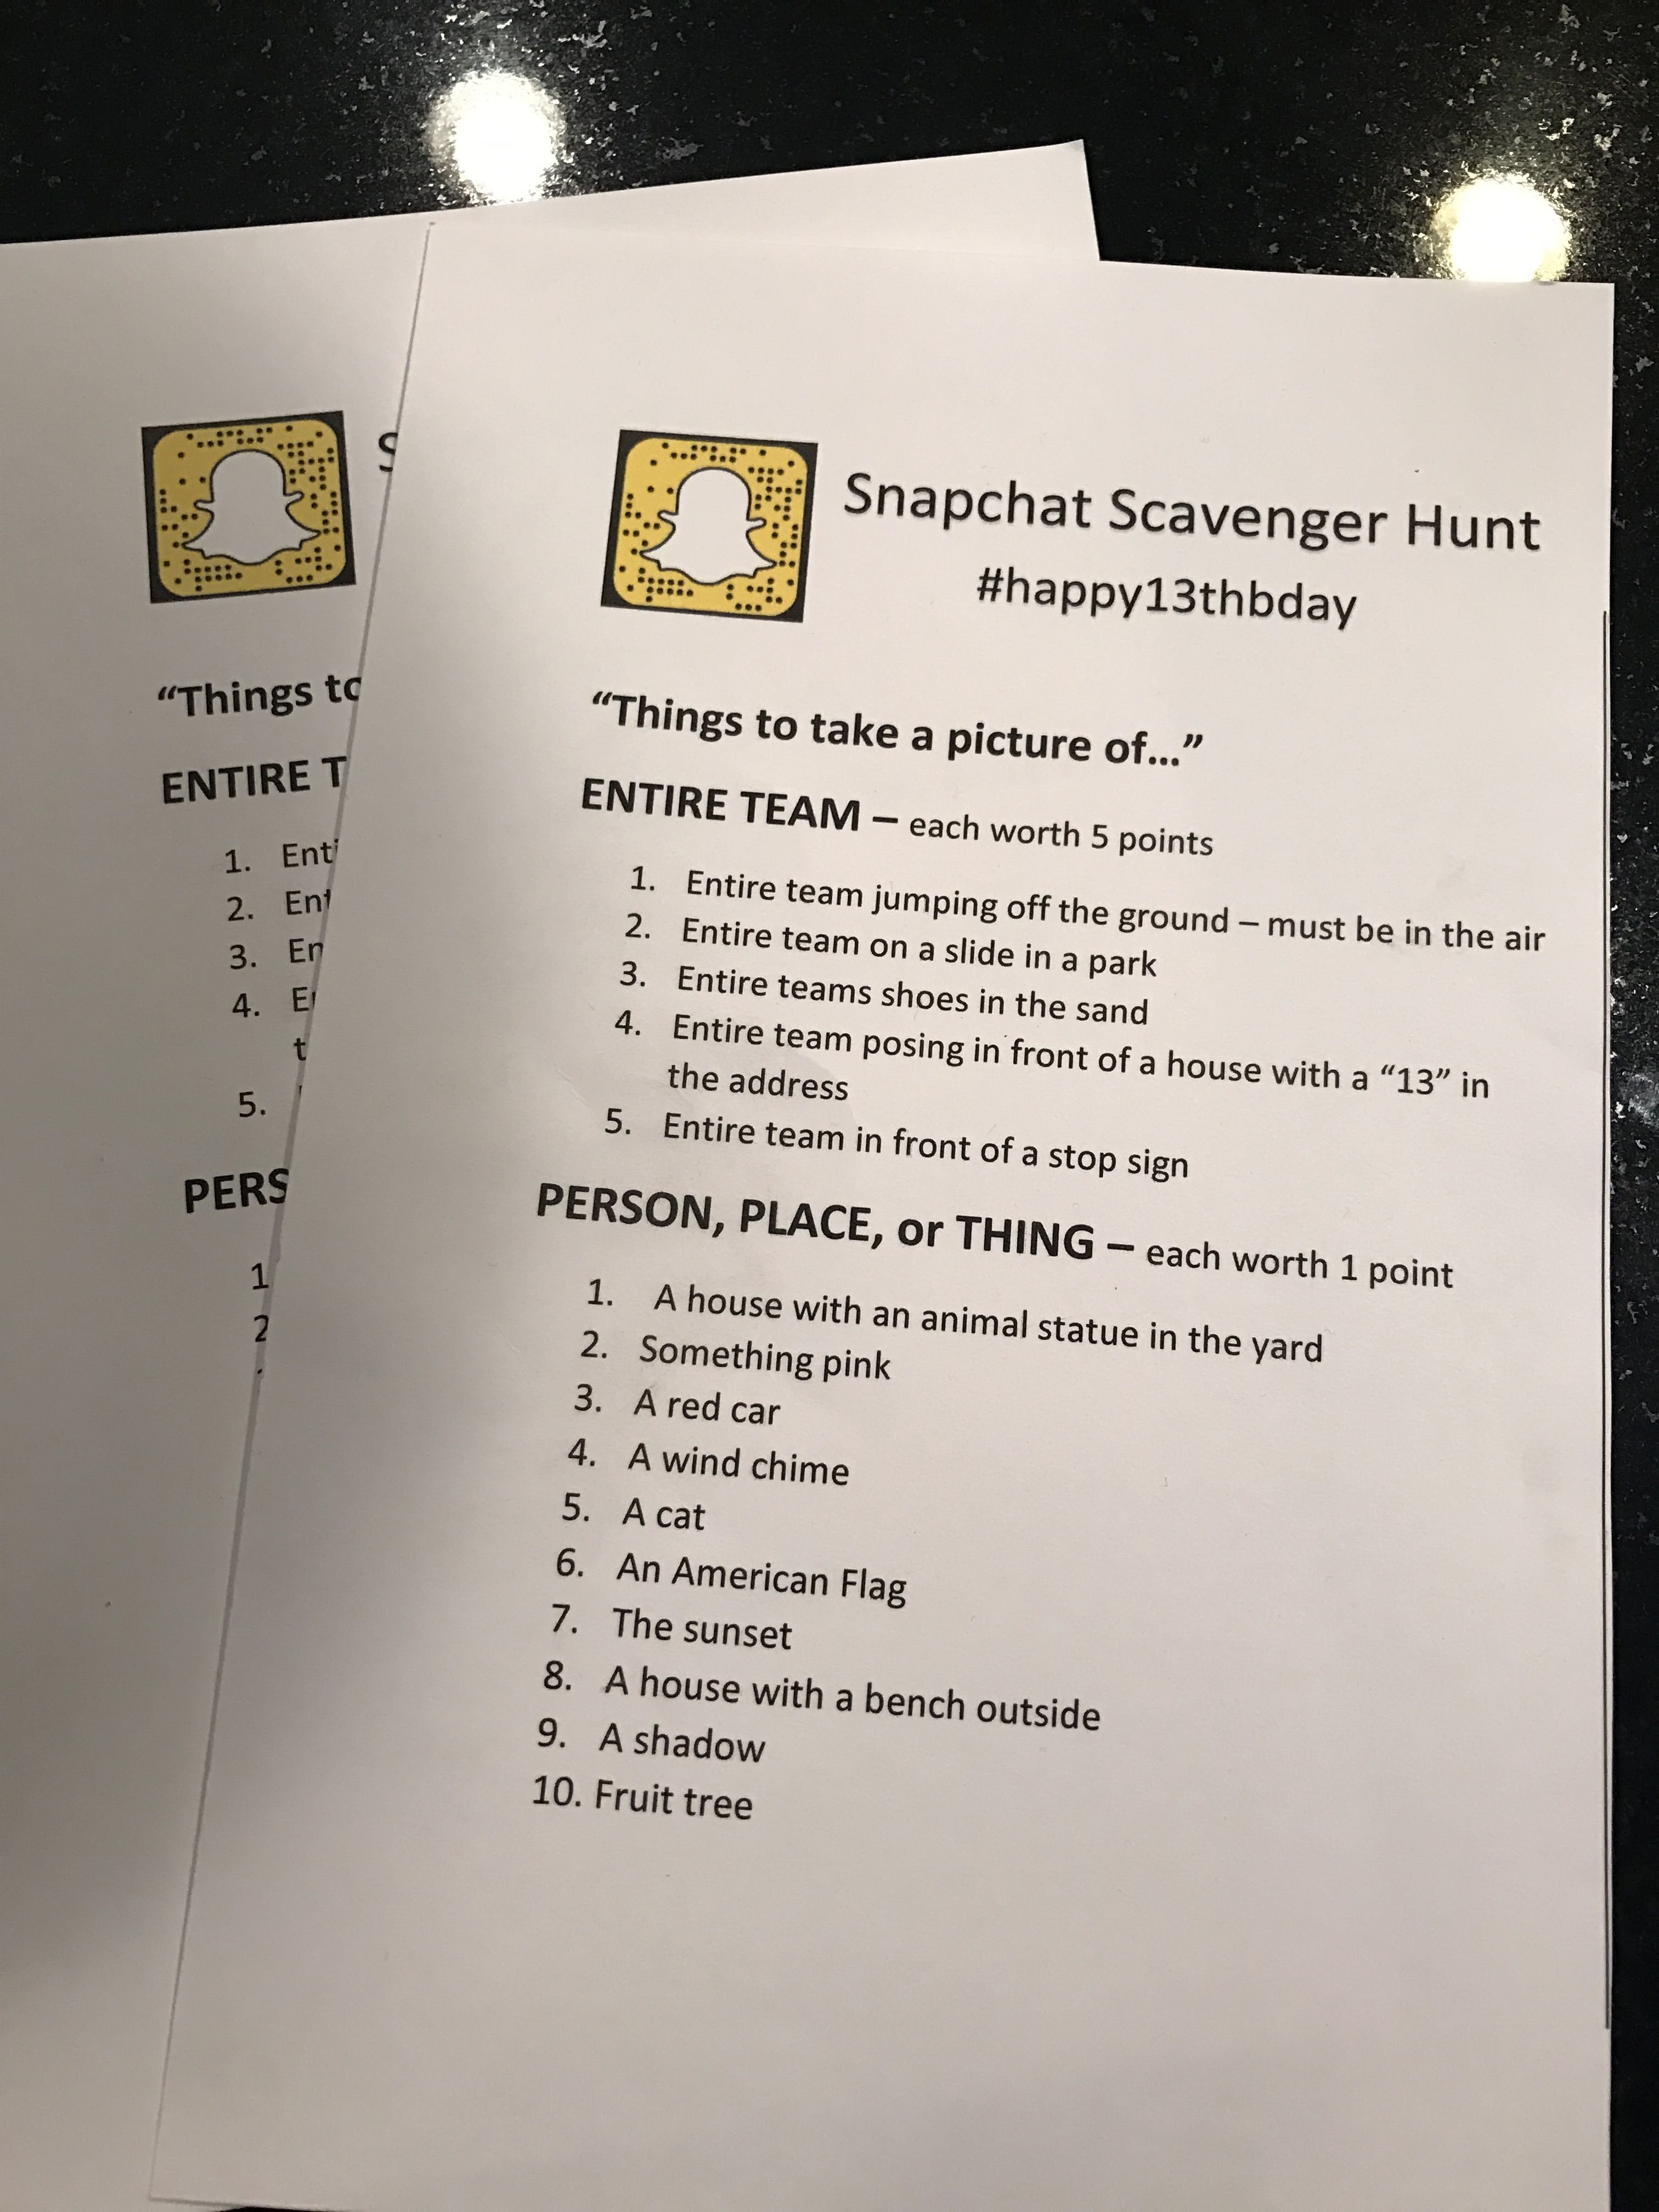 10 Lovable Sweet 16 Party Game Ideas snapchat neighborhood scavenger hunt cierras 13th birthday 1 2022